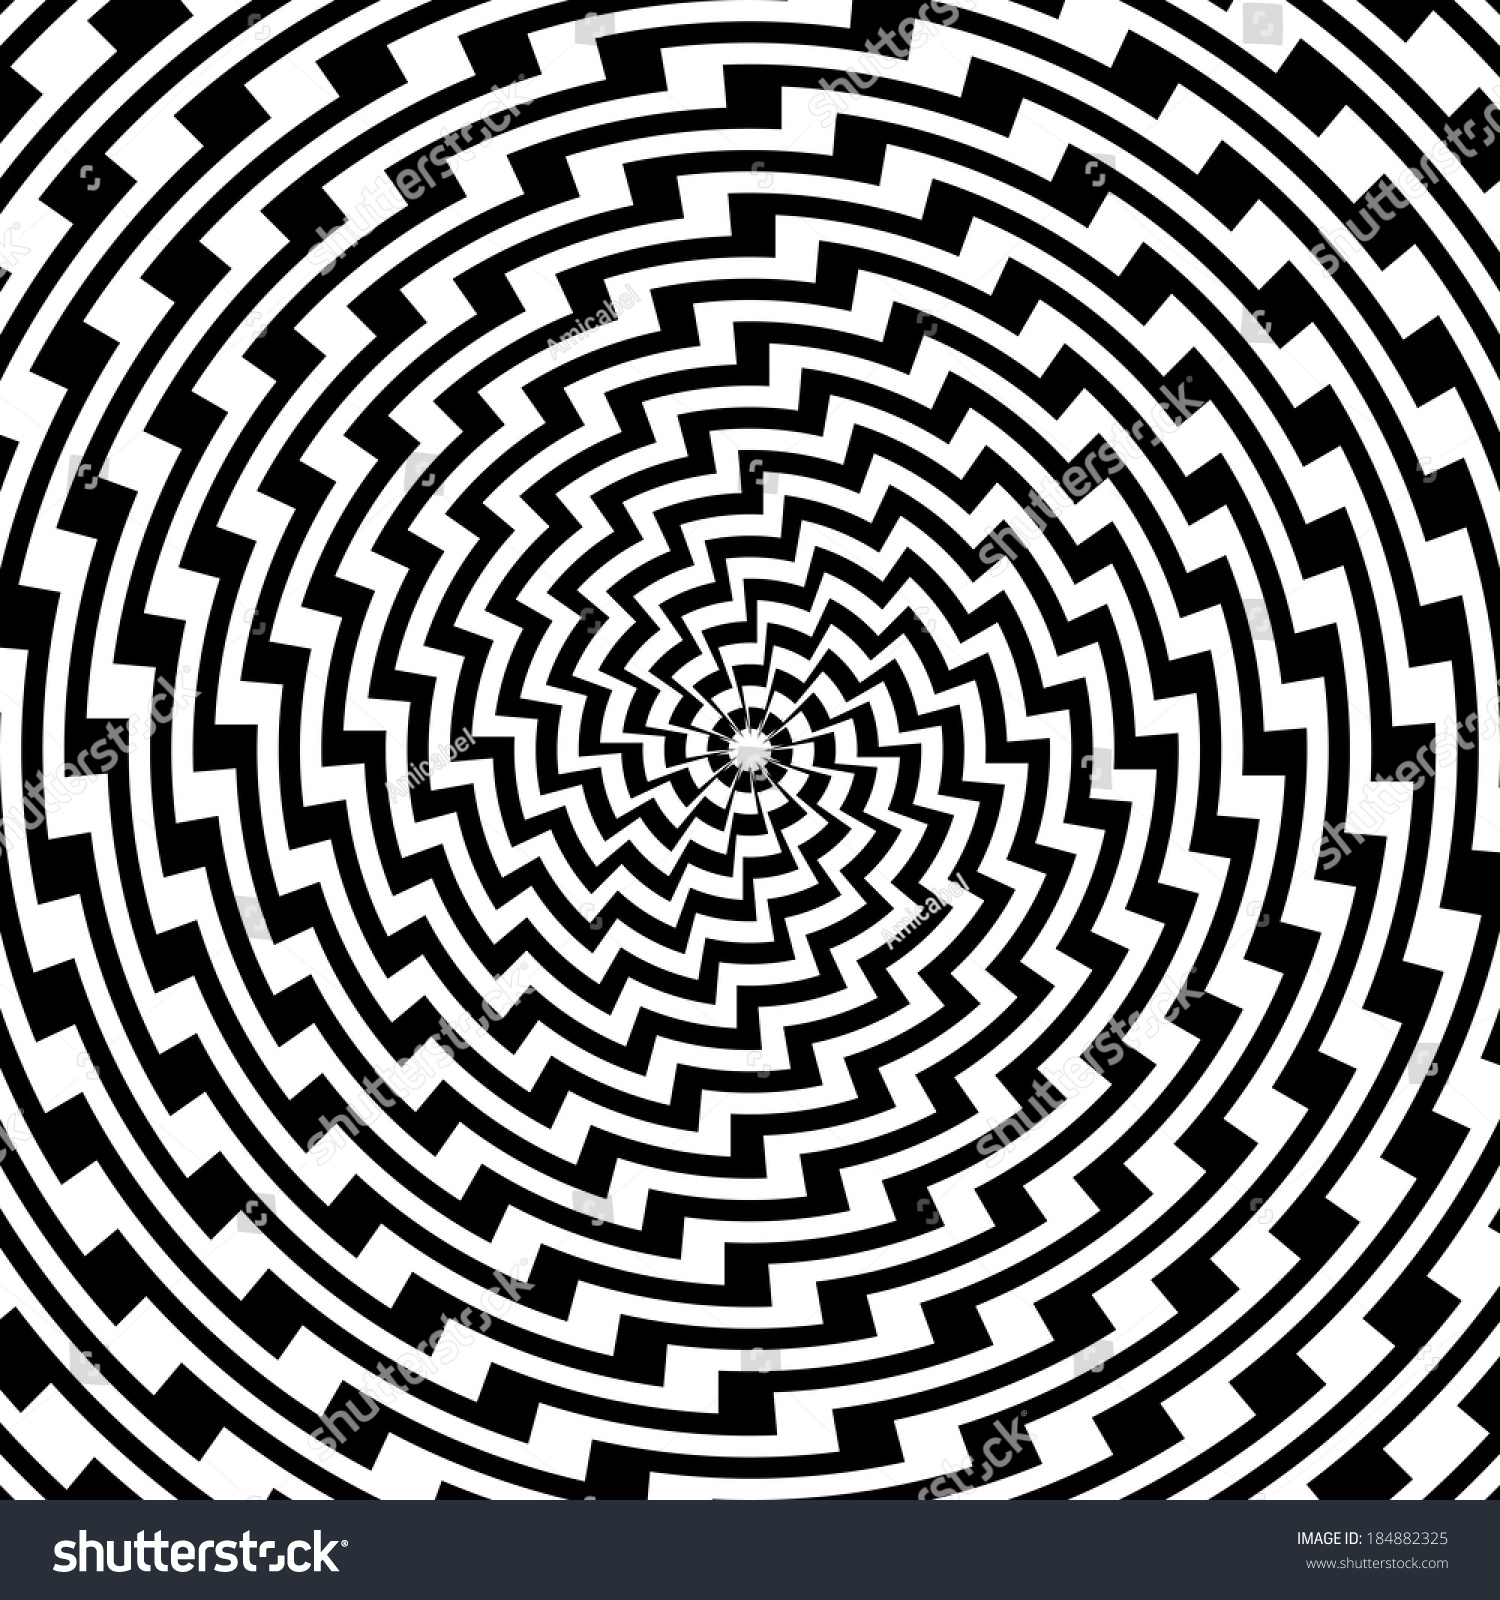 stock-vector-design-monochrome-spiral-circular-movement-illusion-background-abstract-striped-distortion-184882325.jpg